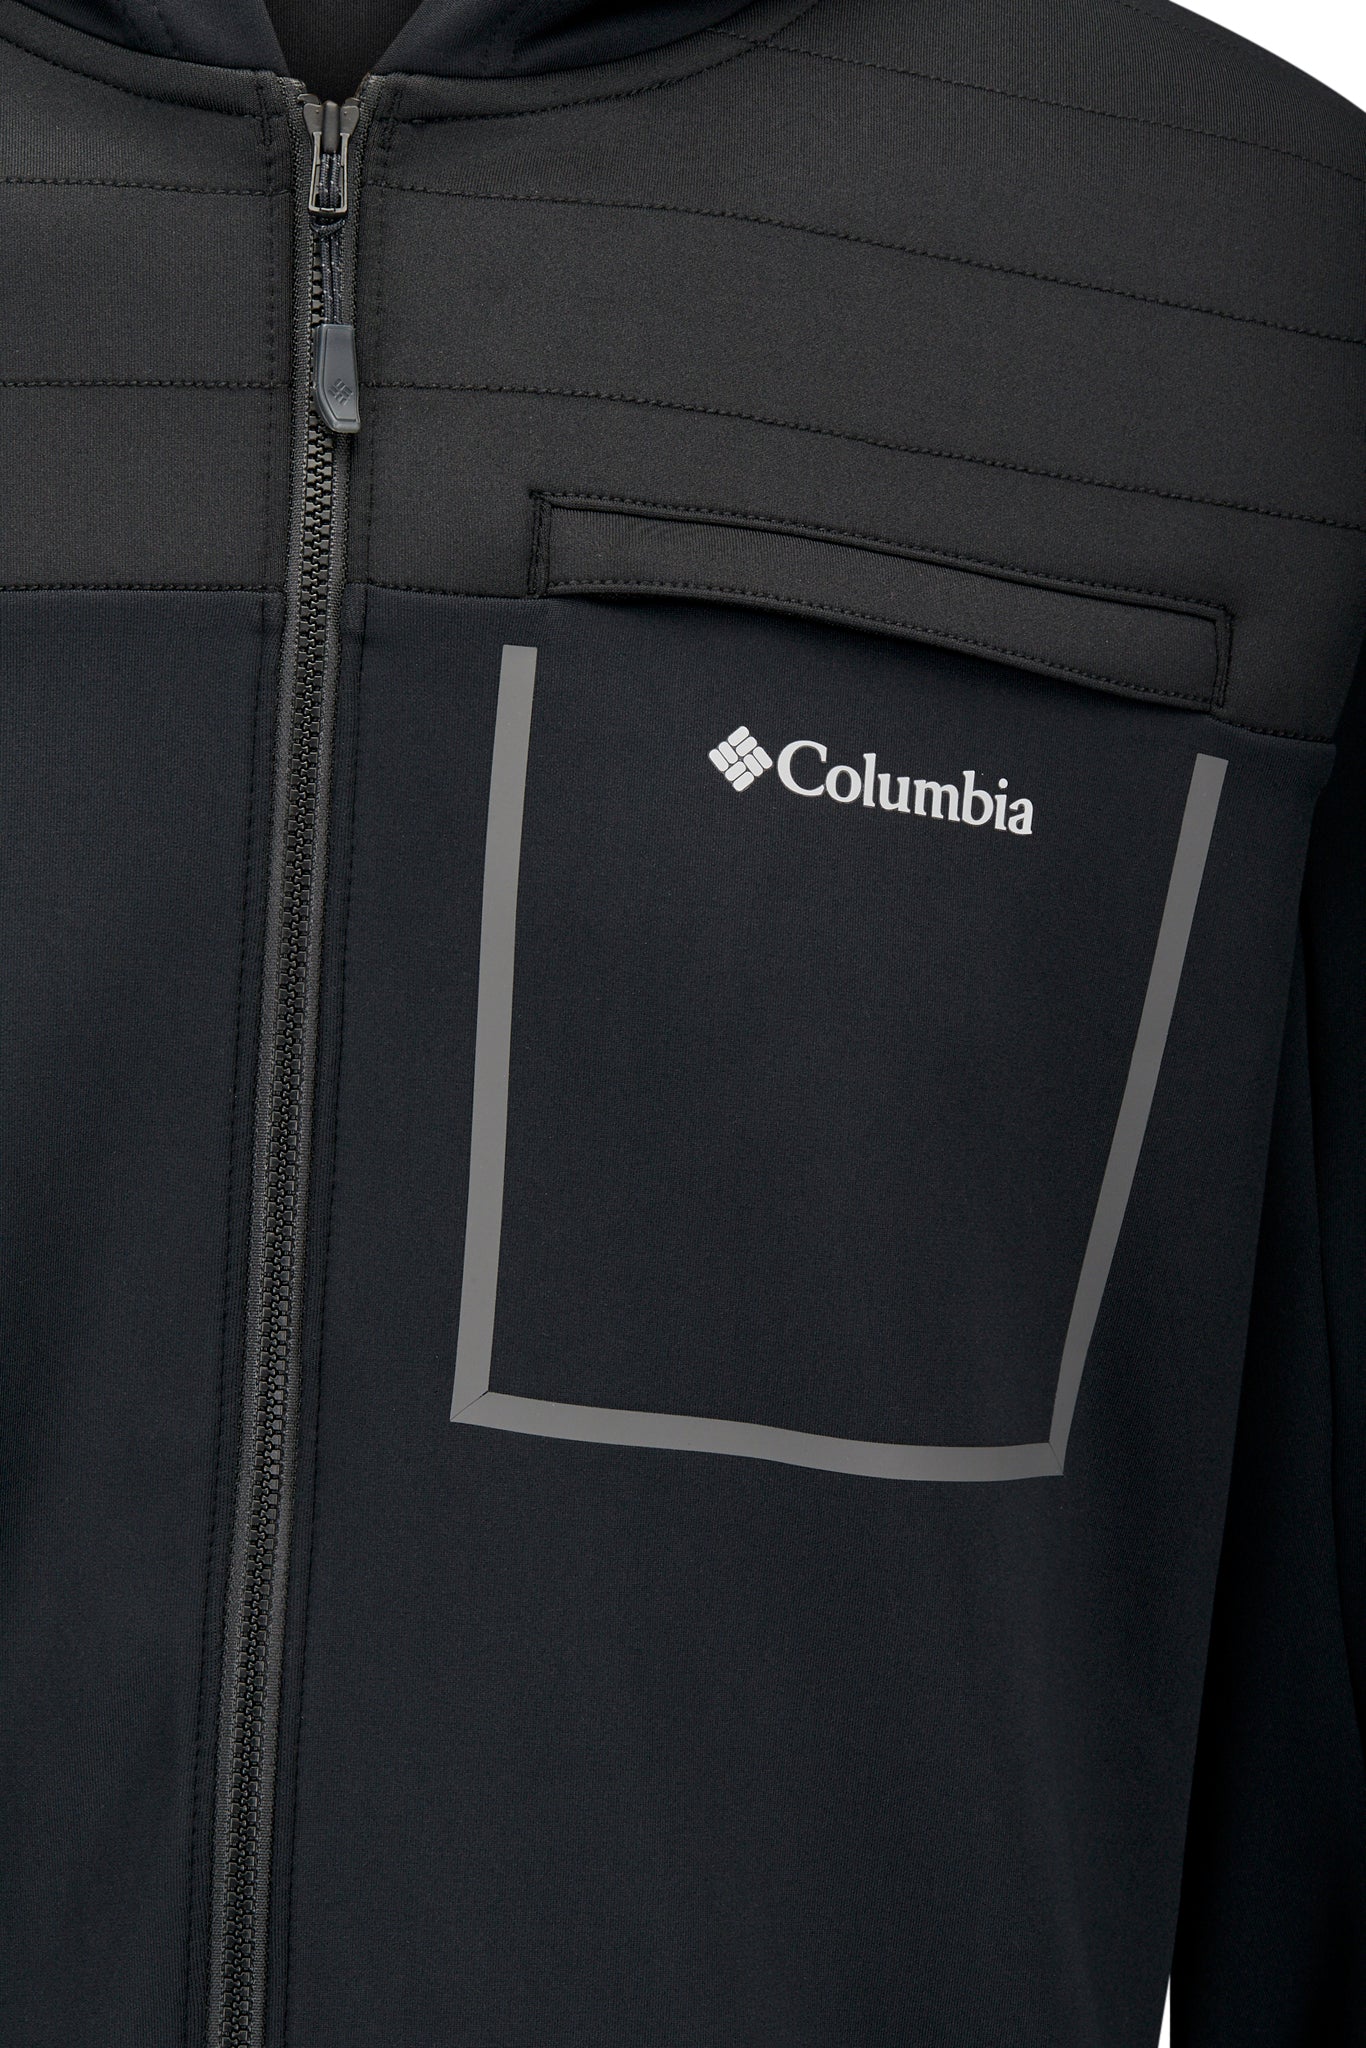 columbia tech trail hybrid hoodie